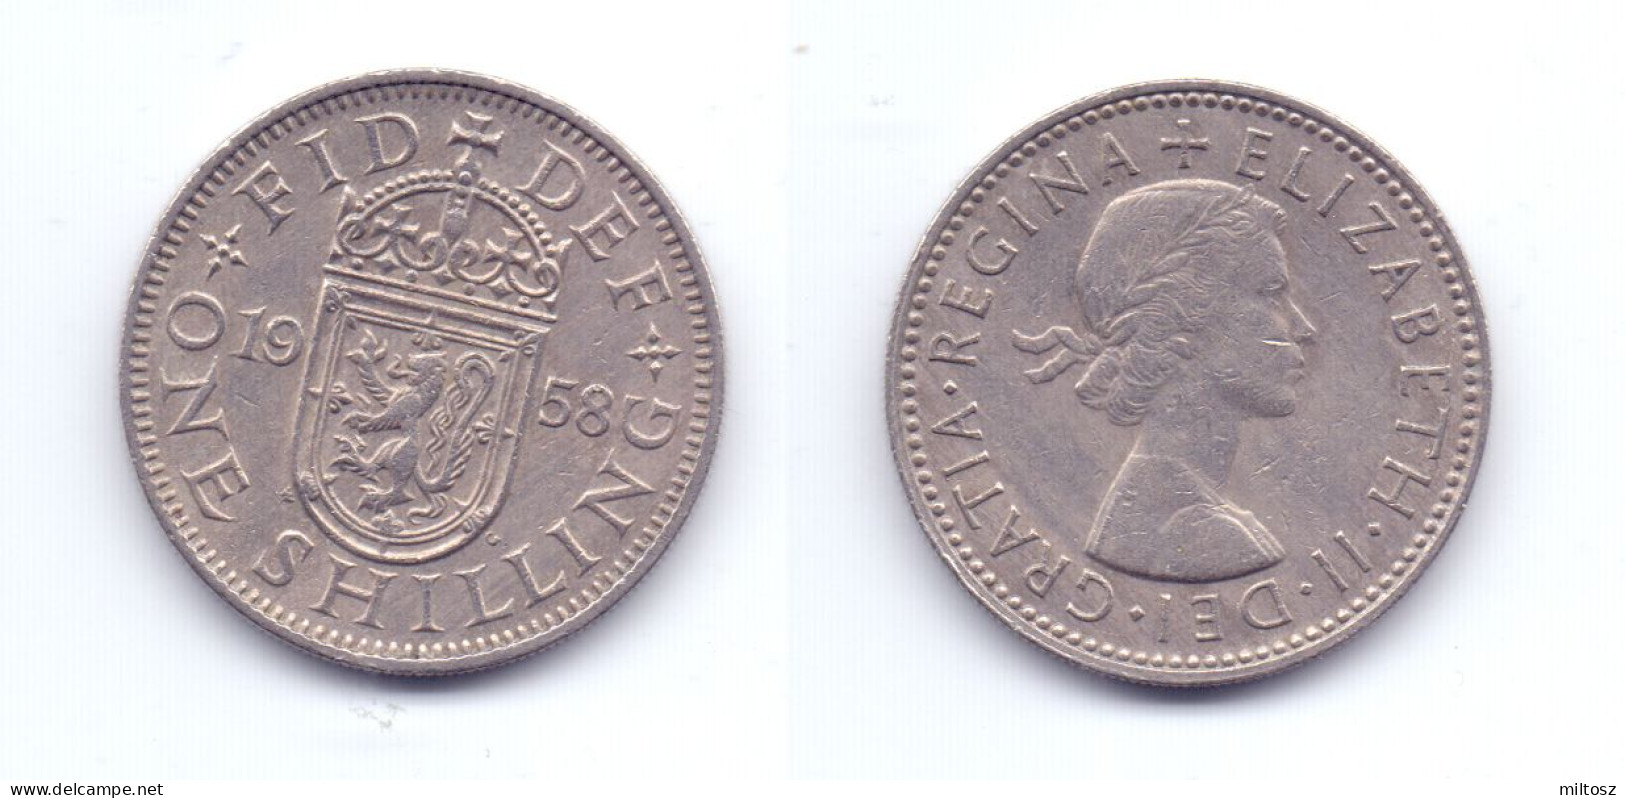 Great Britain 1 Shilling 1958 Scottish Crest - I. 1 Shilling